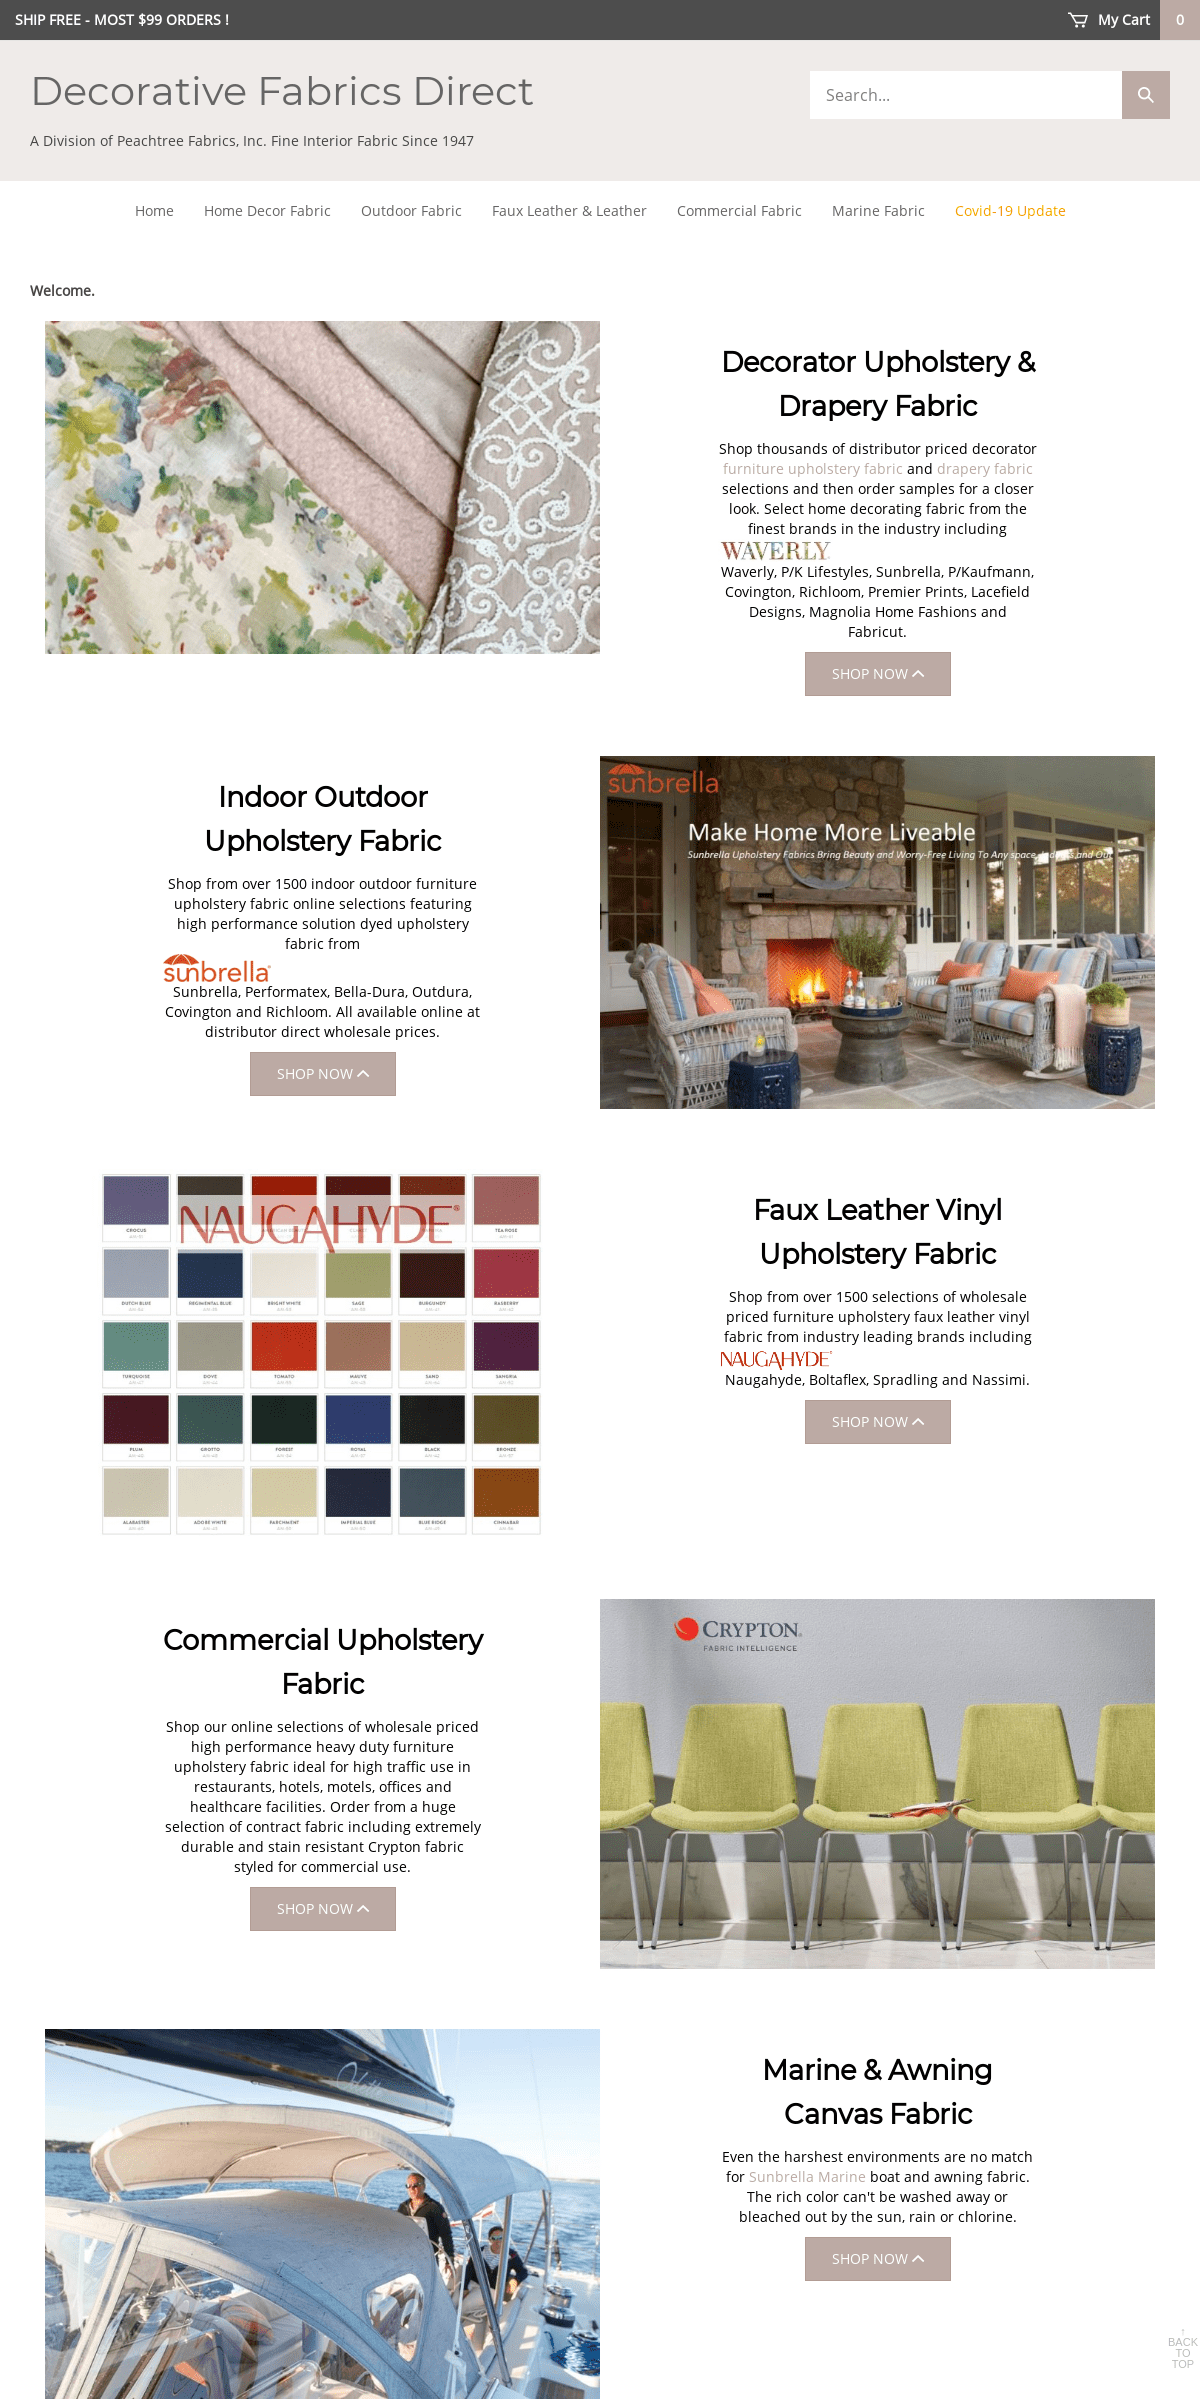 A complete backup of decorativefabricsdirect.com